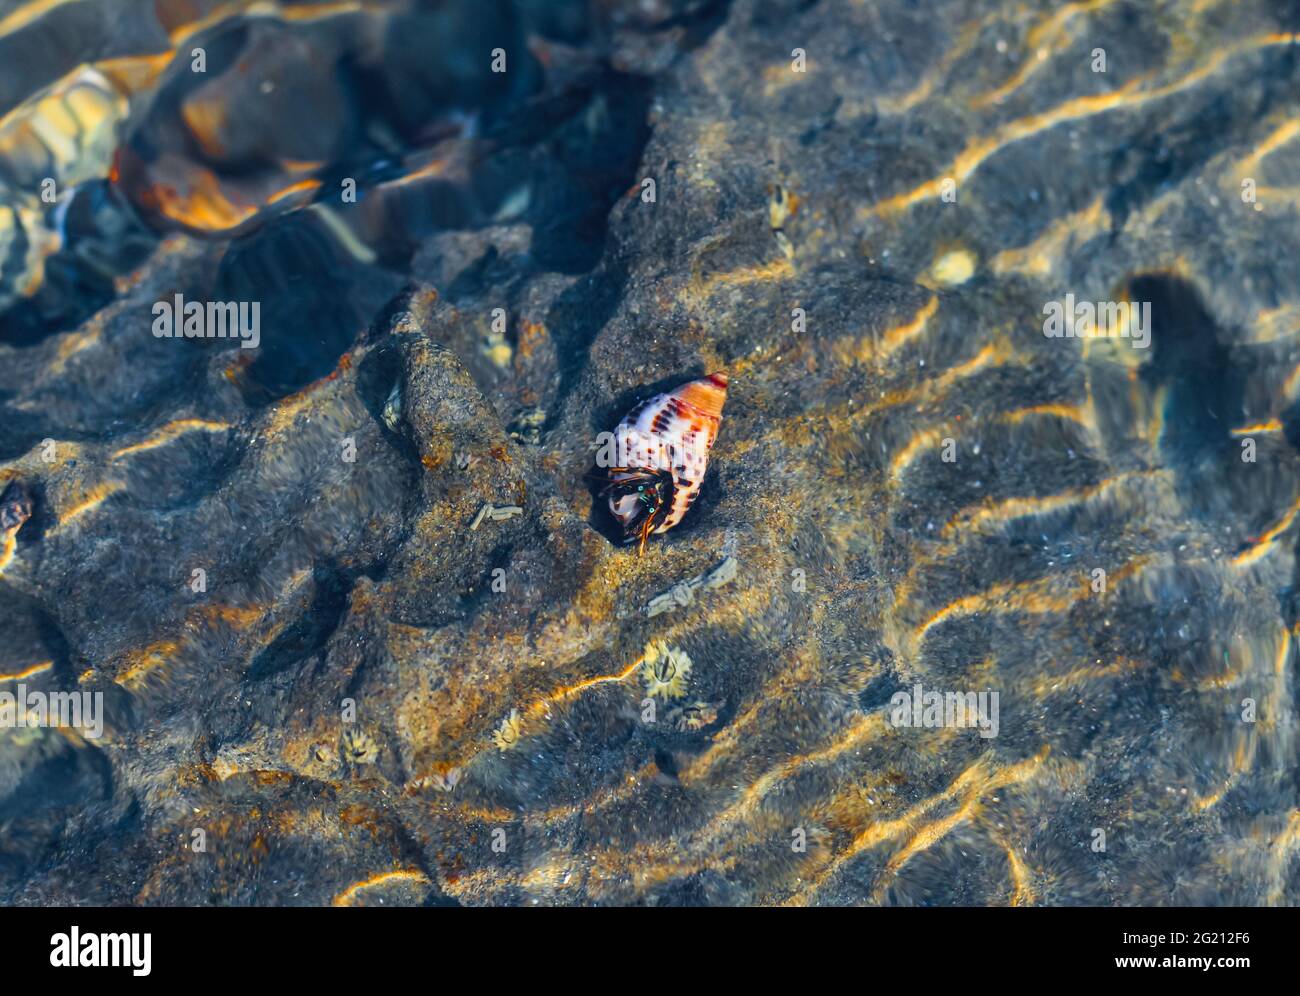 Rare Photography, Alive seashell walking on the rock underwater. Alive seashell in underwater. Underwater photography. Stock Photo